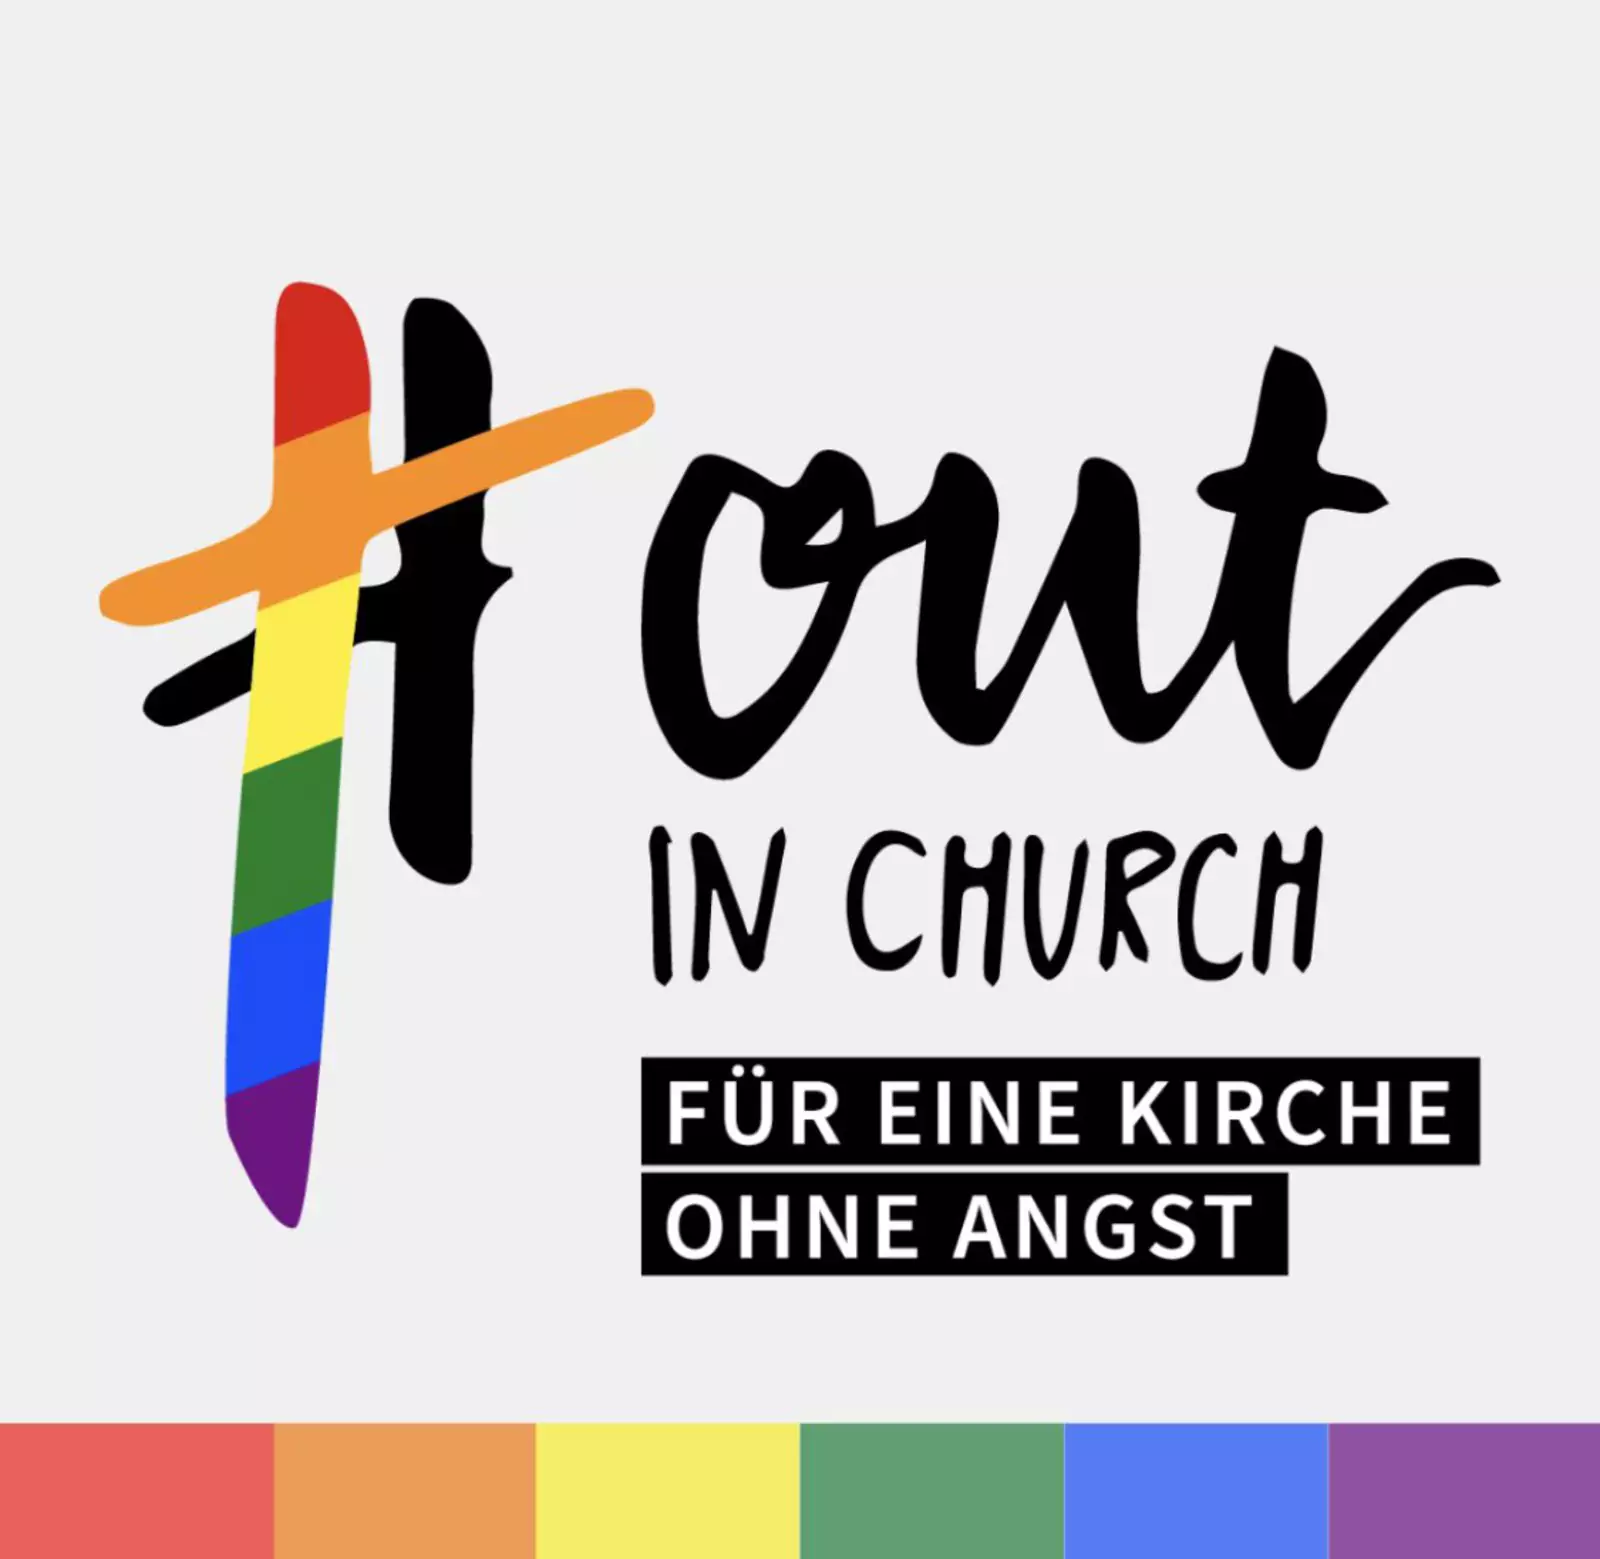 Акция #OutInChurch в Германии